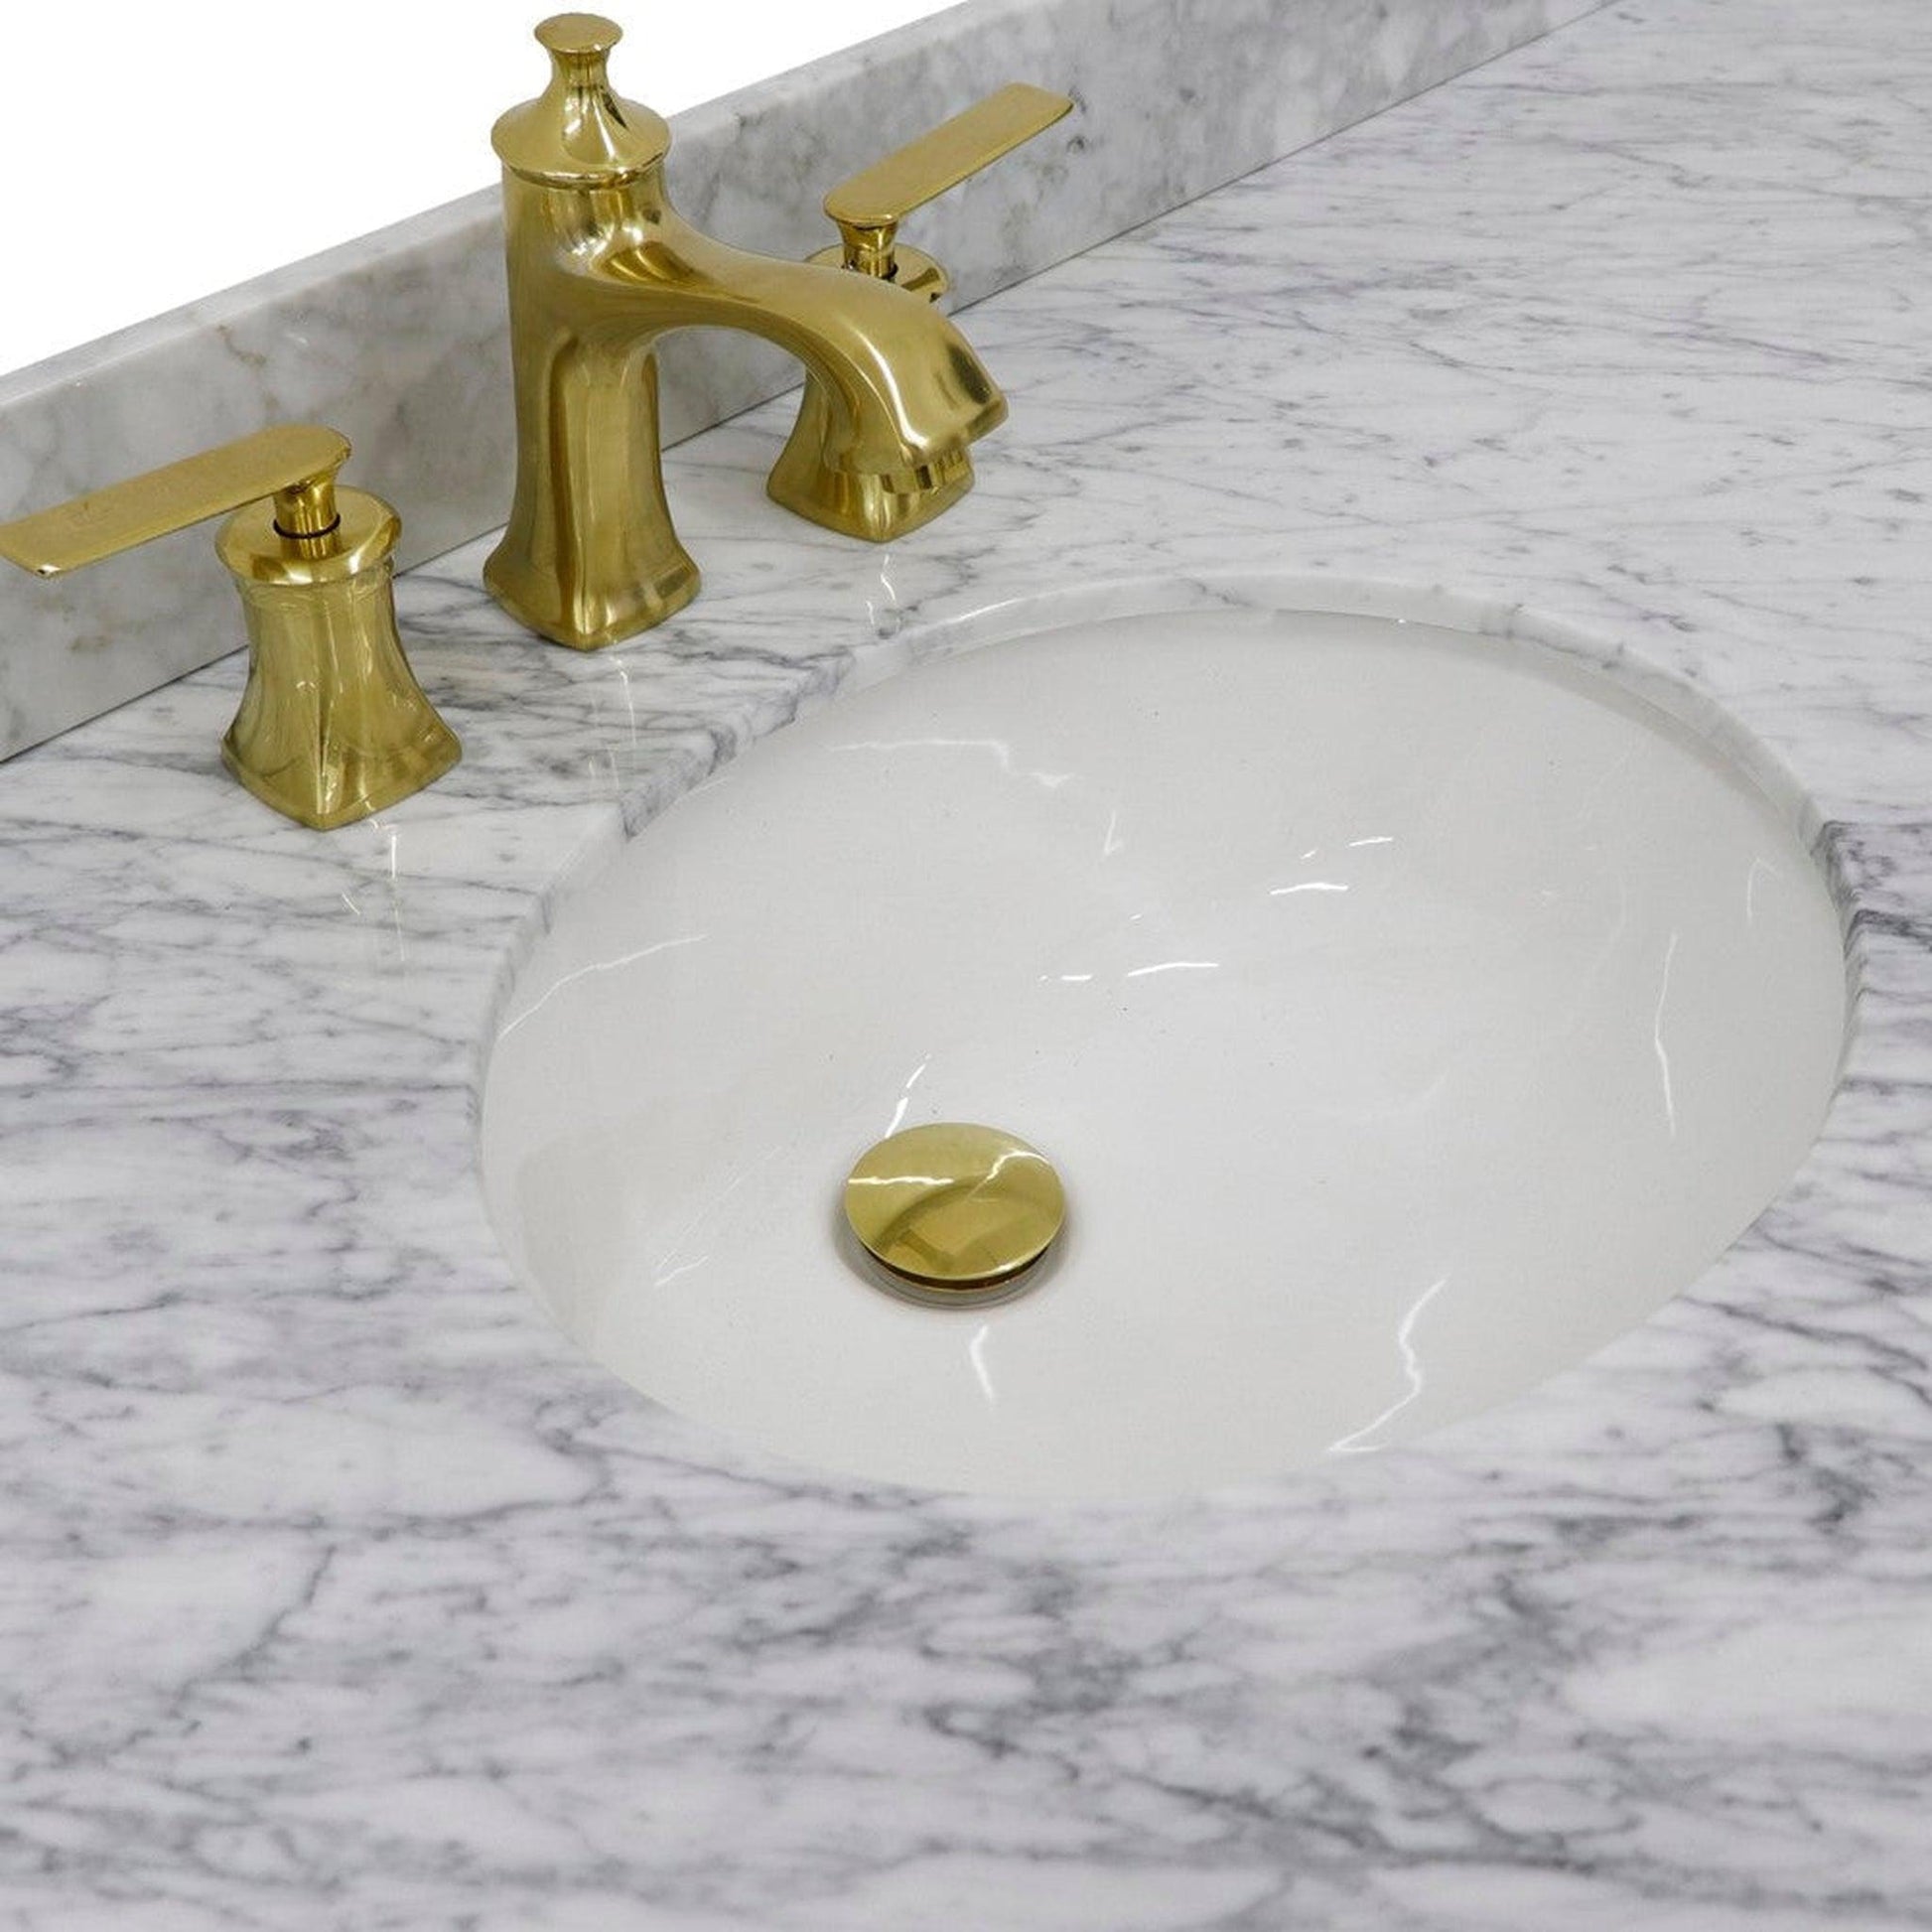 Bellaterra Home Forli 61" 2-Door 6-Drawer White Freestanding Vanity Set With Ceramic Undermount Oval Sink and White Carrara Marble Top